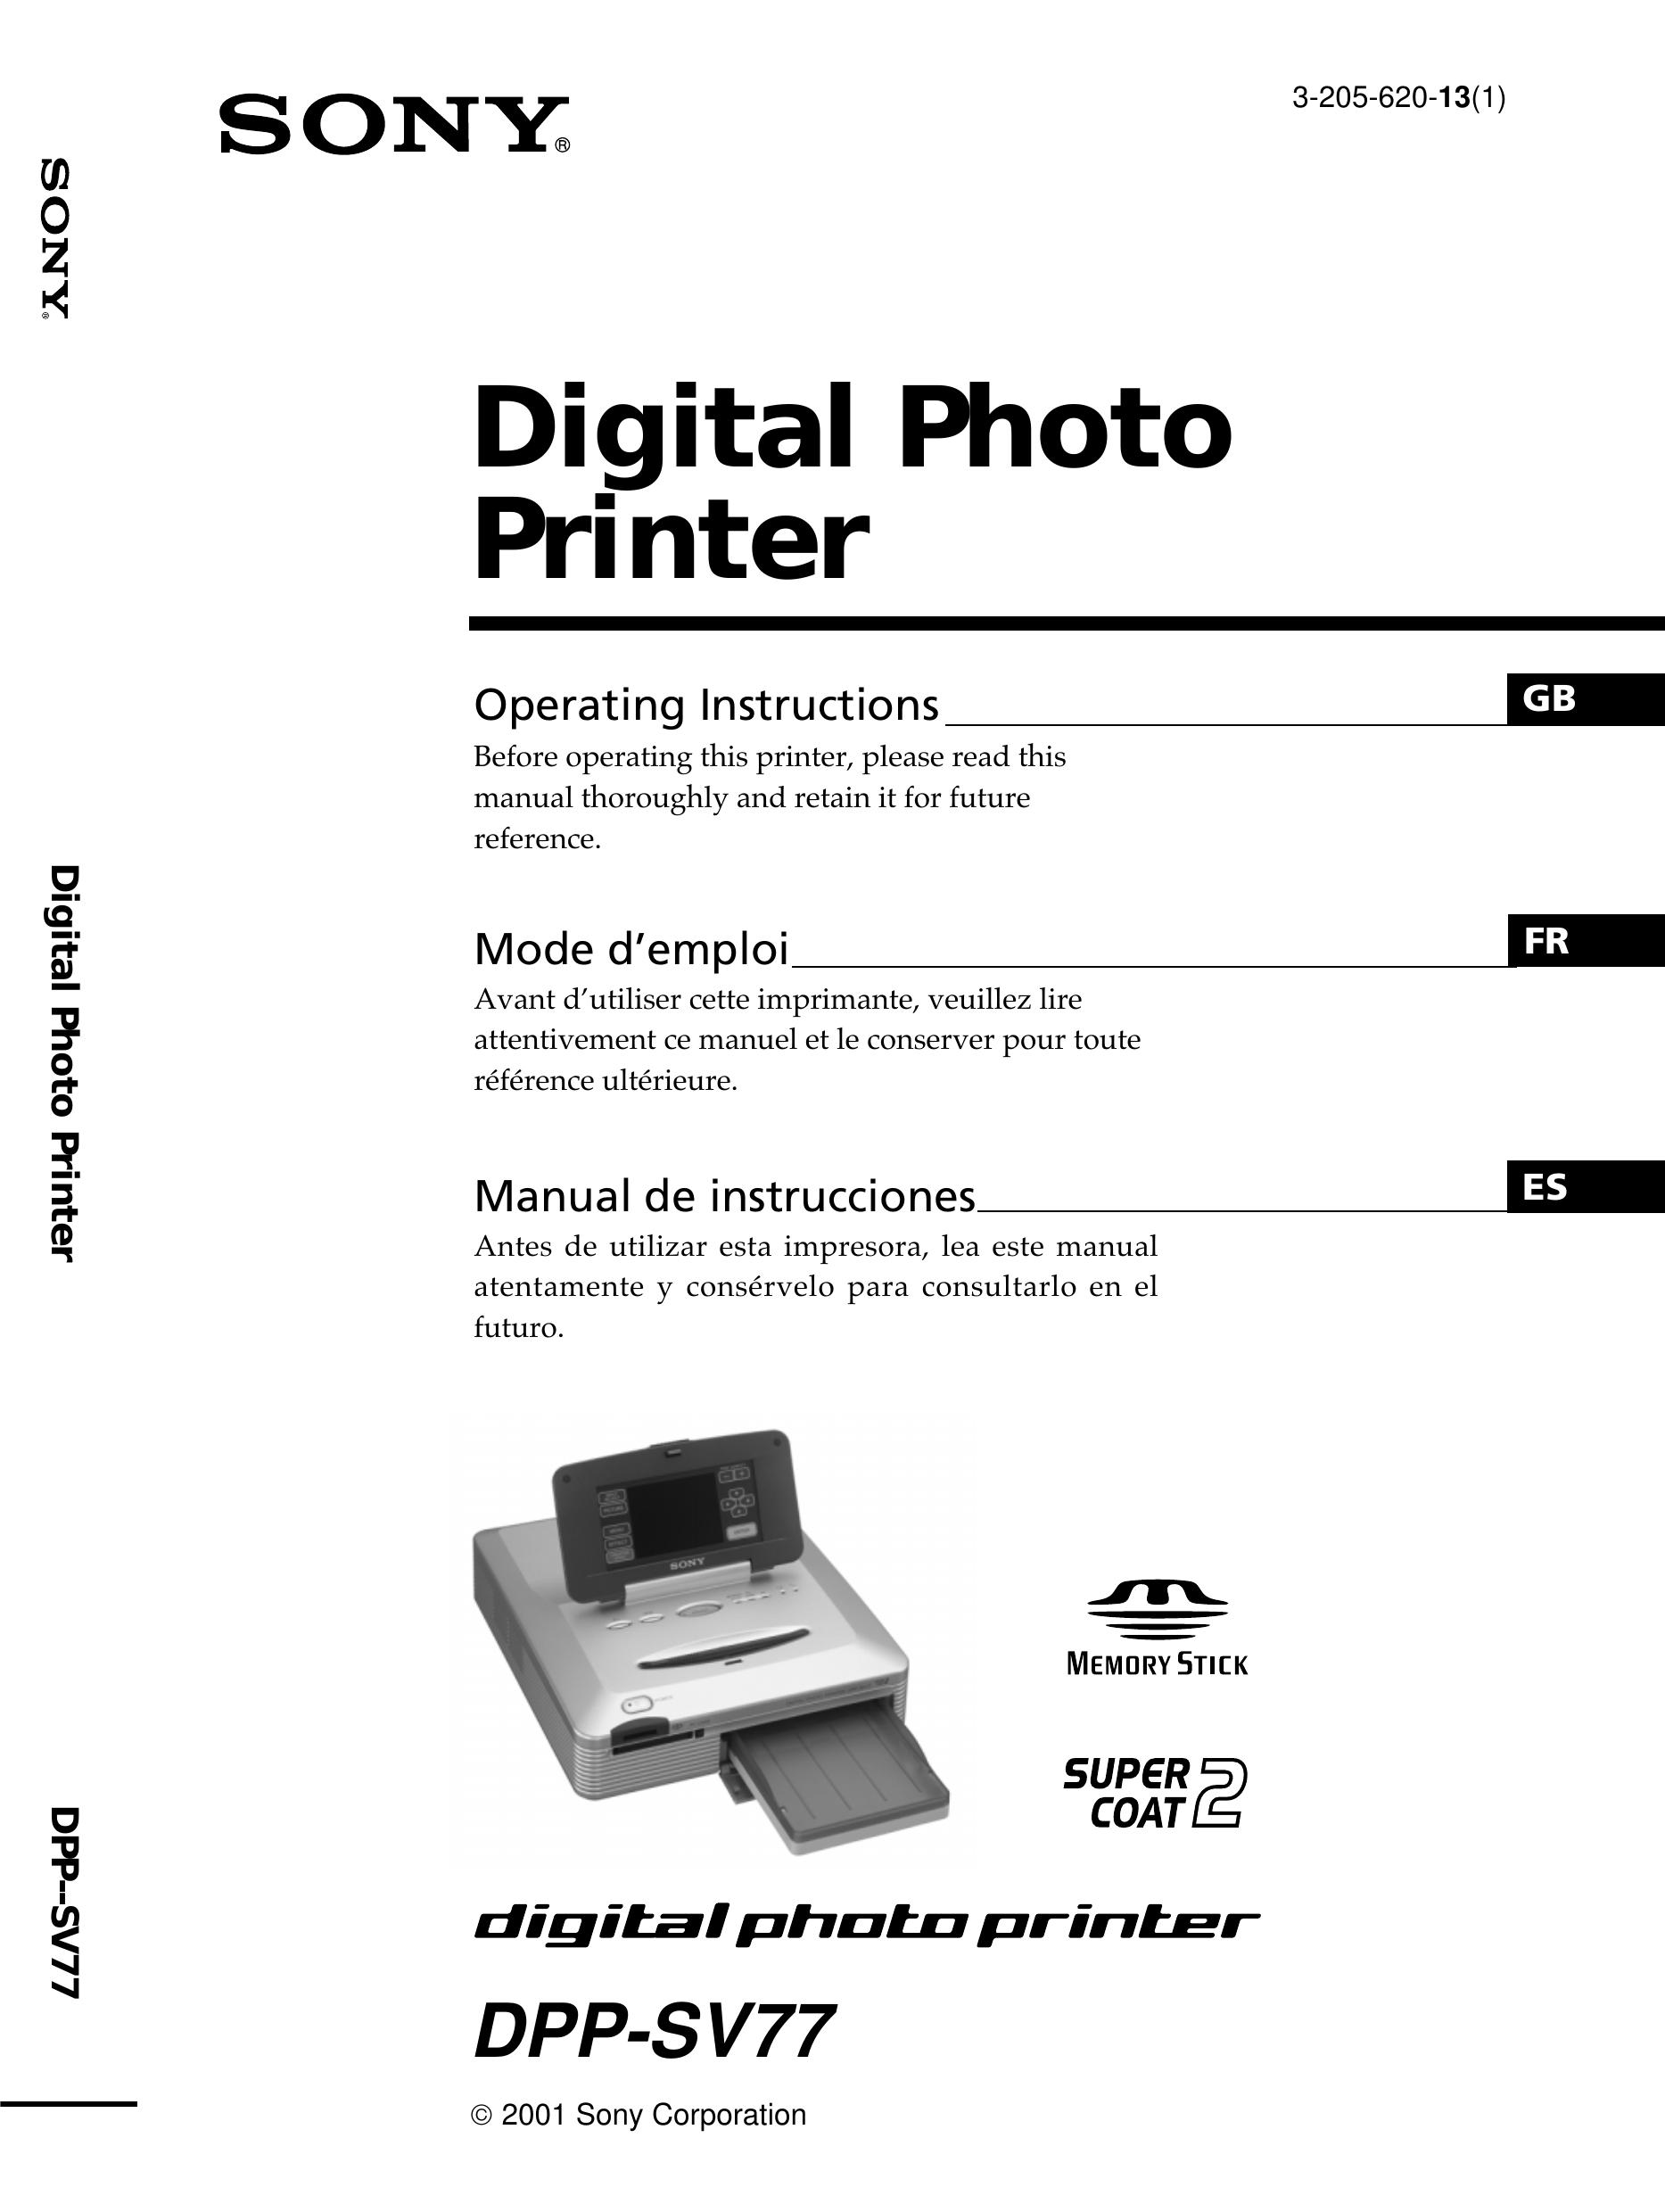 Sony DPP--SV77 Photo Printer User Manual